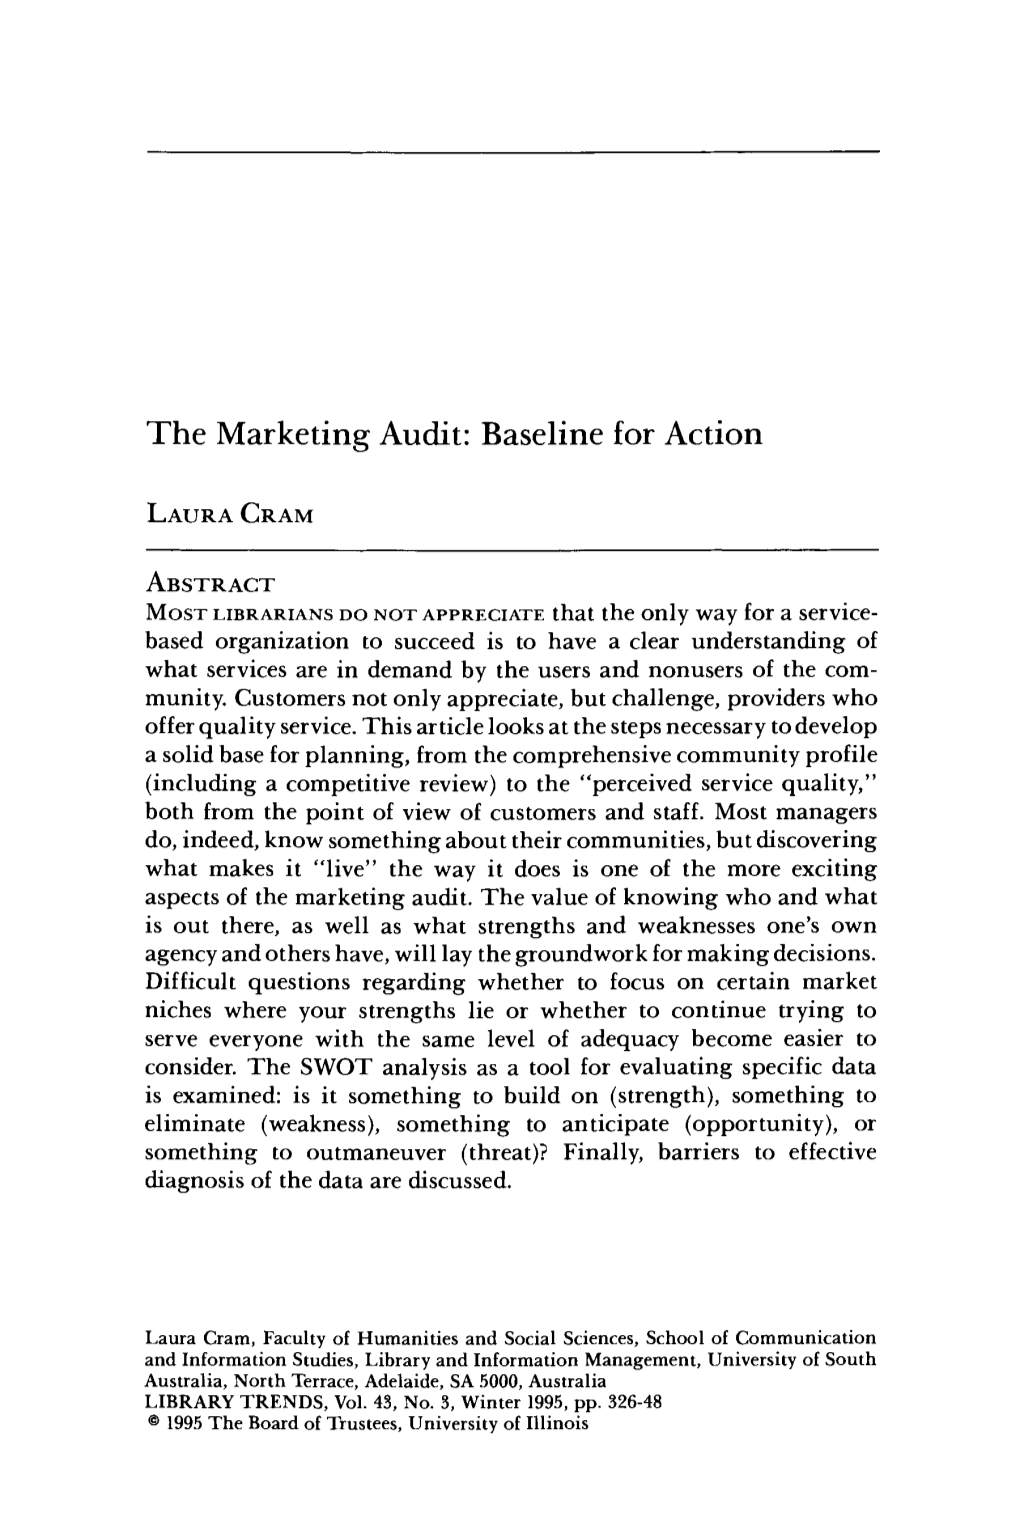 The Marketing Audit: Baseline for Action